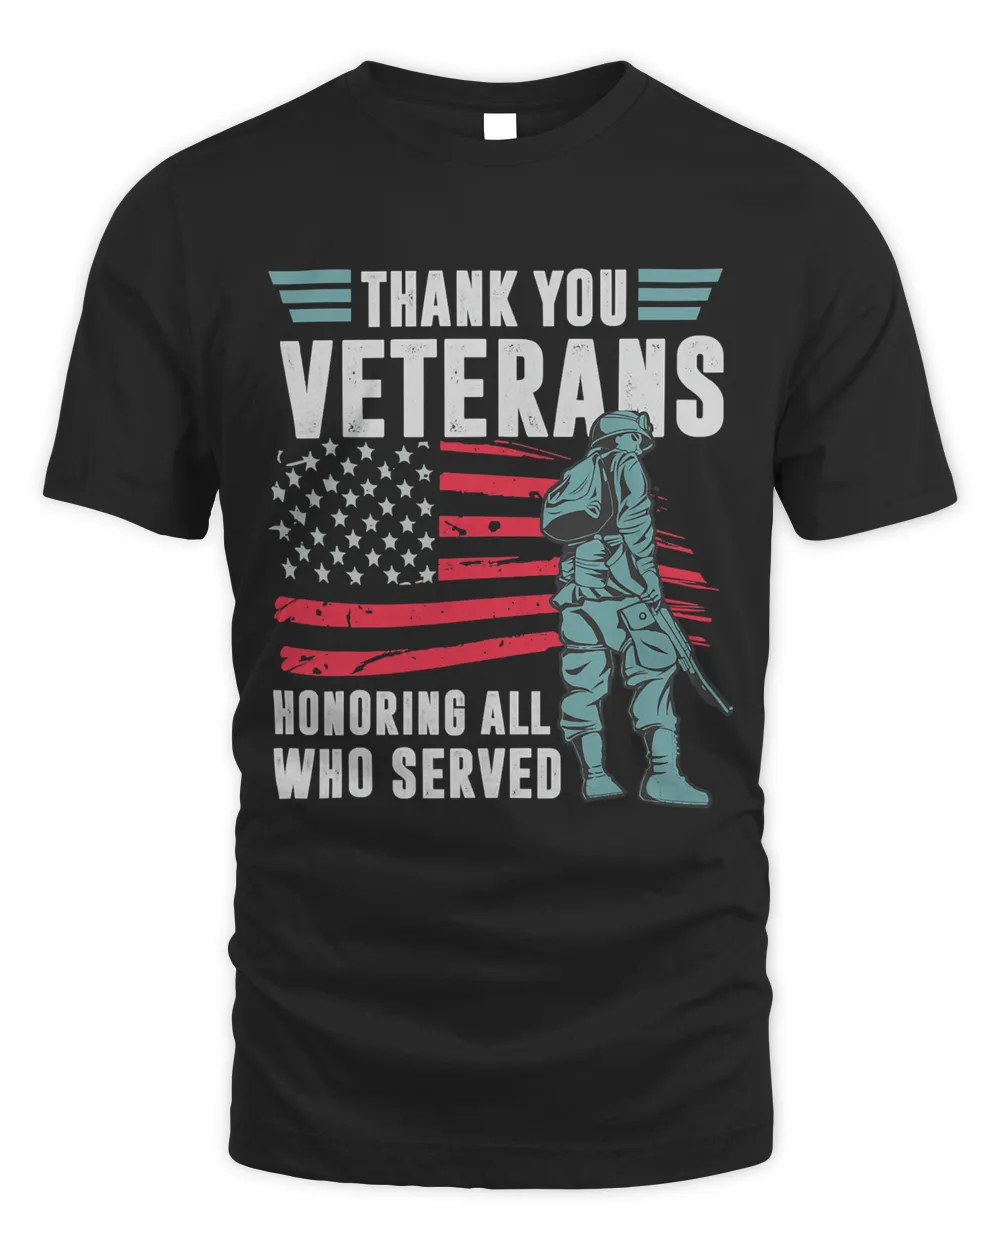 Thank you veterans 314